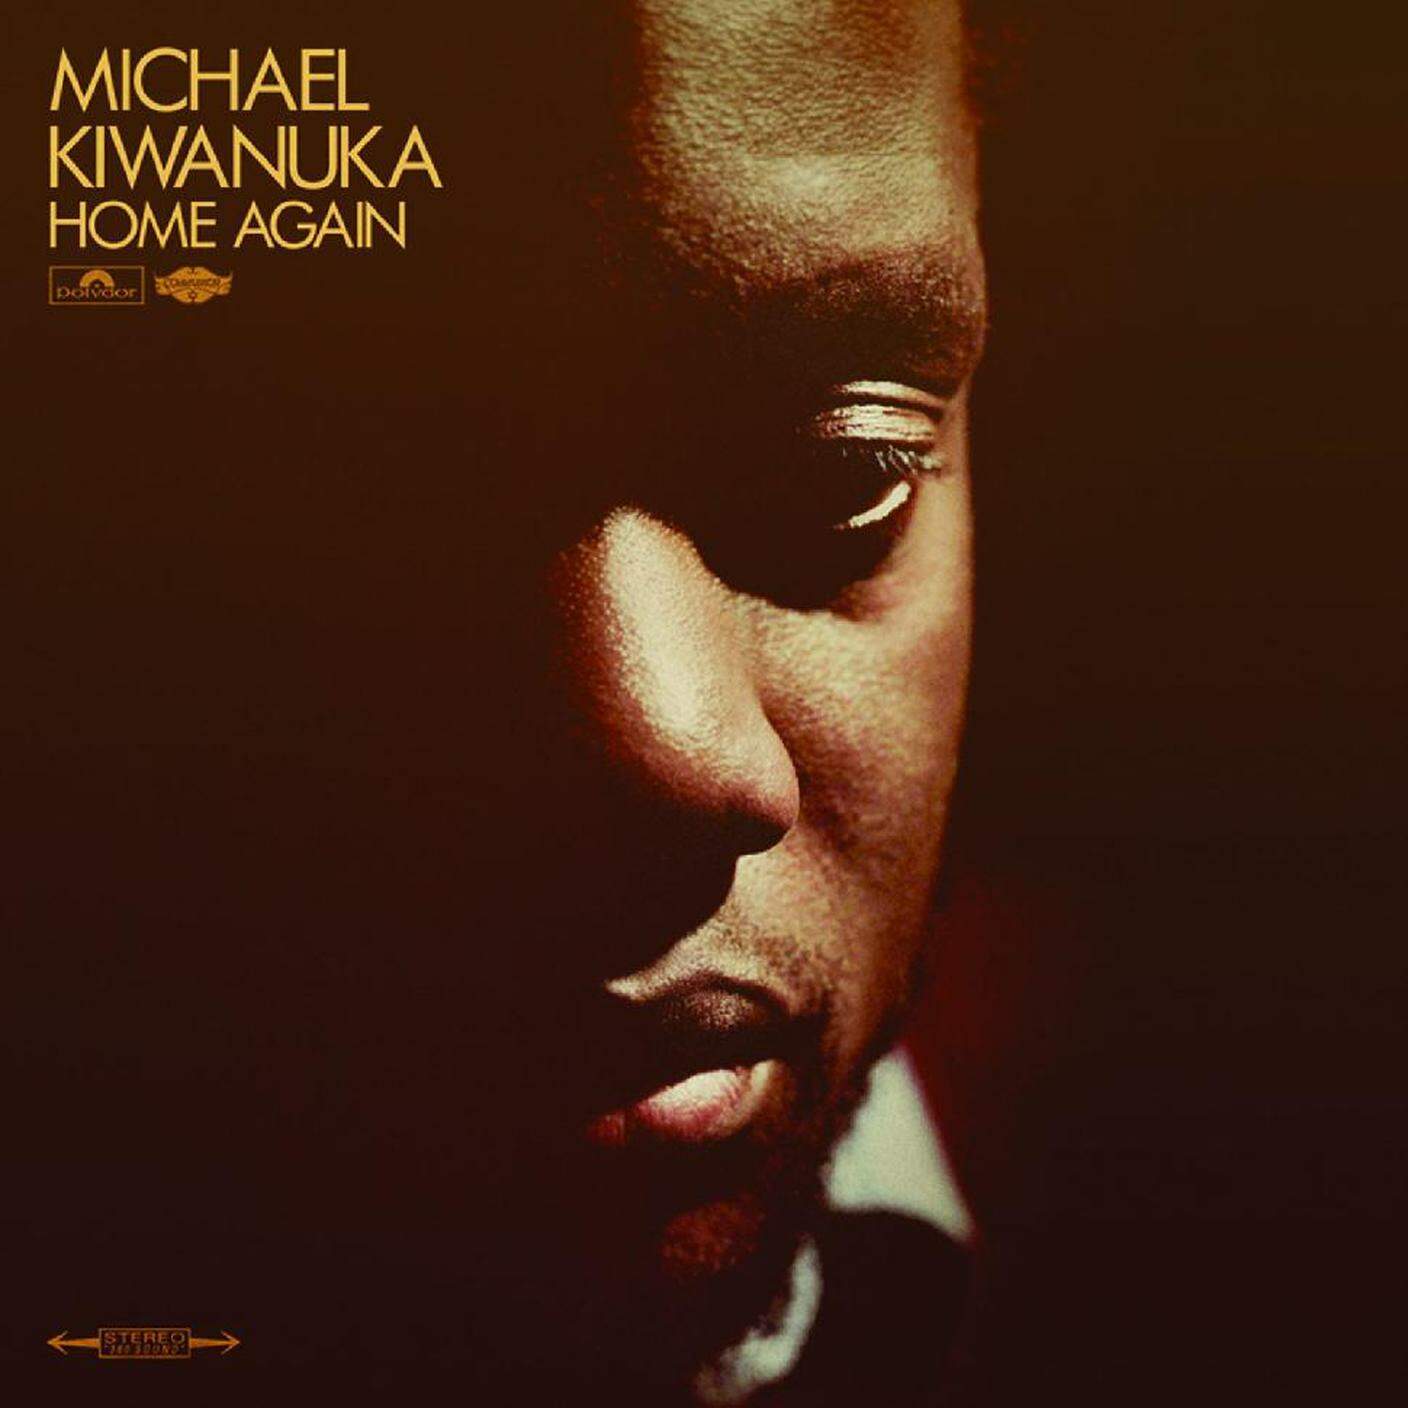 Michael Kiwanuka; "Home again"; Polydor (dettaglio copertina)